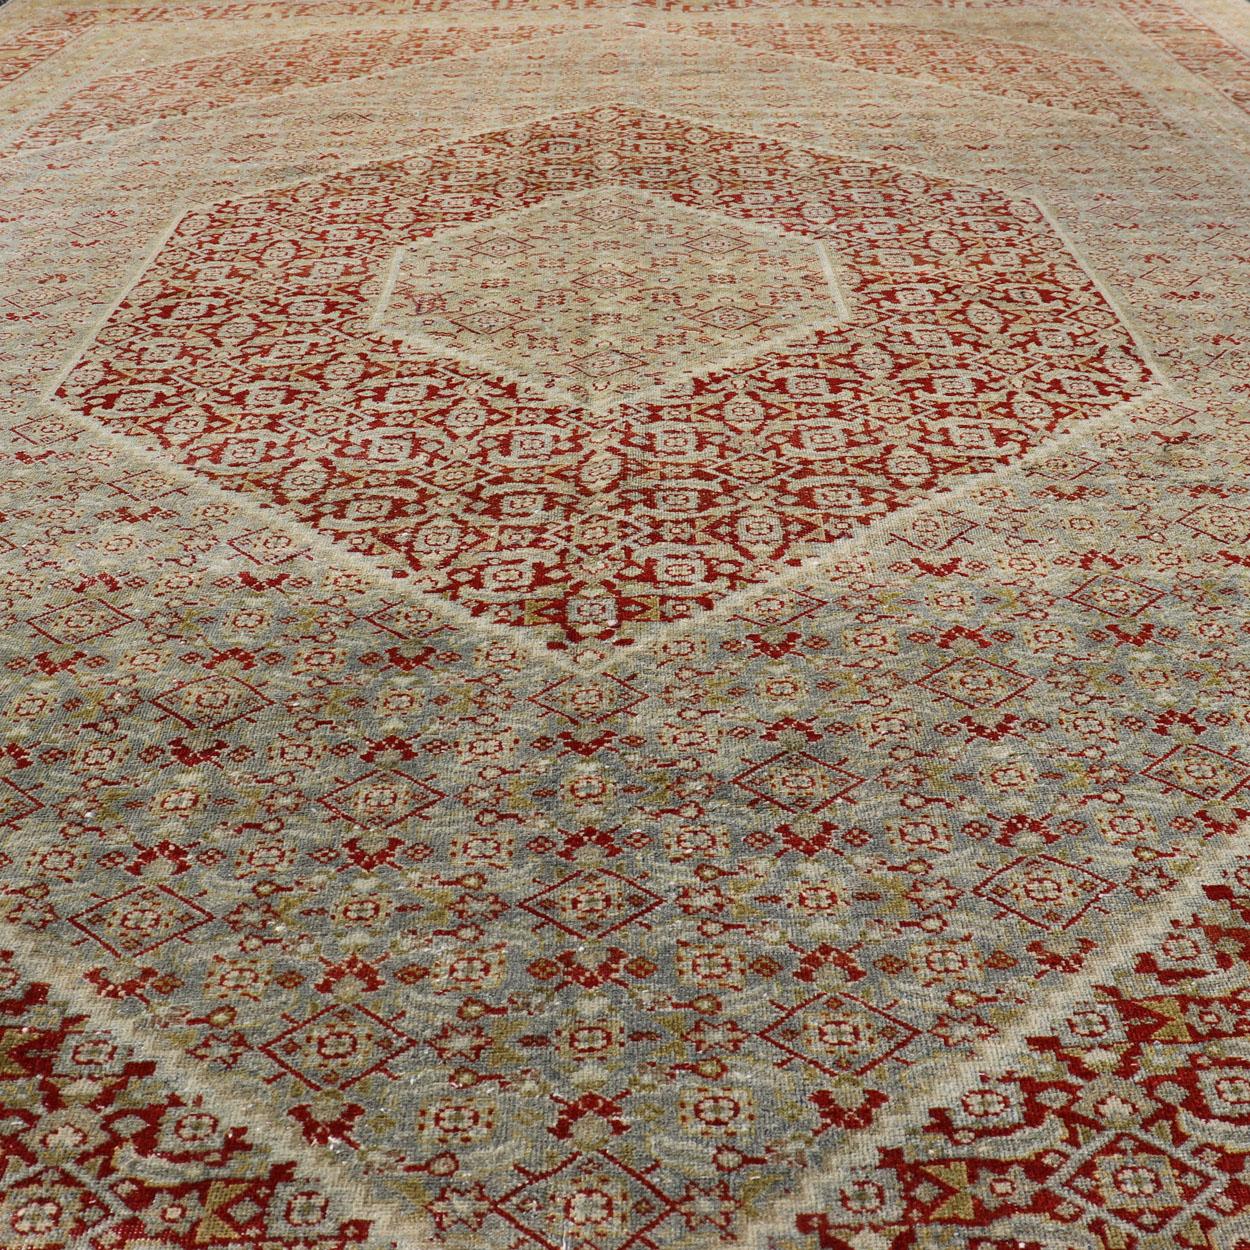 Antique Persian Tabriz Distressed Carpet with Geometric Diamond Design For Sale 1